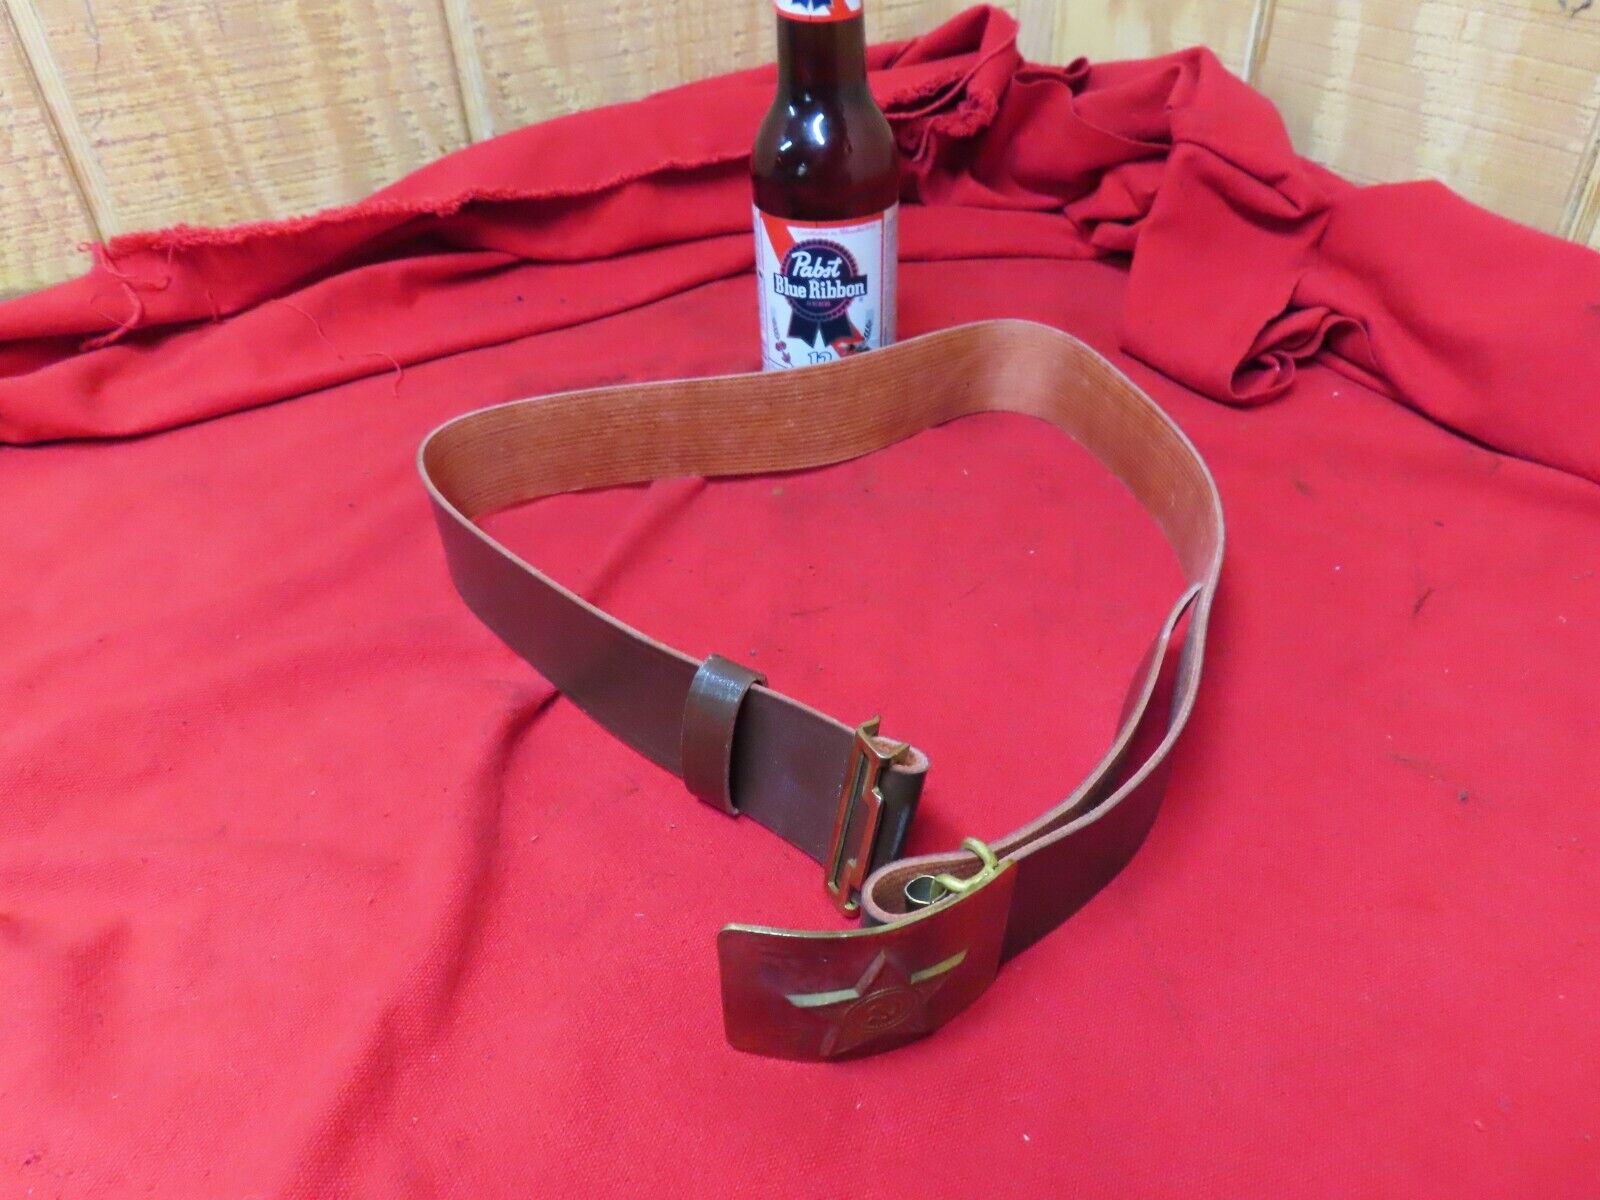 Soviet leather Belt W/Star brass buckle,size,26-36, NEW OTHER🤠🤠🤠#SB1.20.24